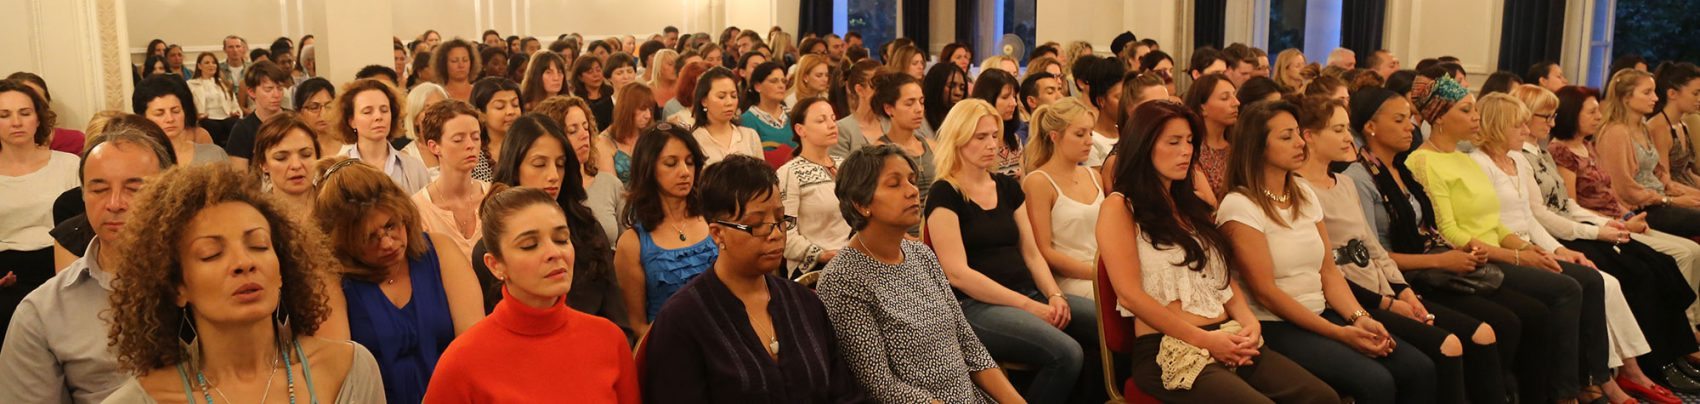 MeditationEvening Crowd - ThetaHealing® Meditation Evening and Sound Bath